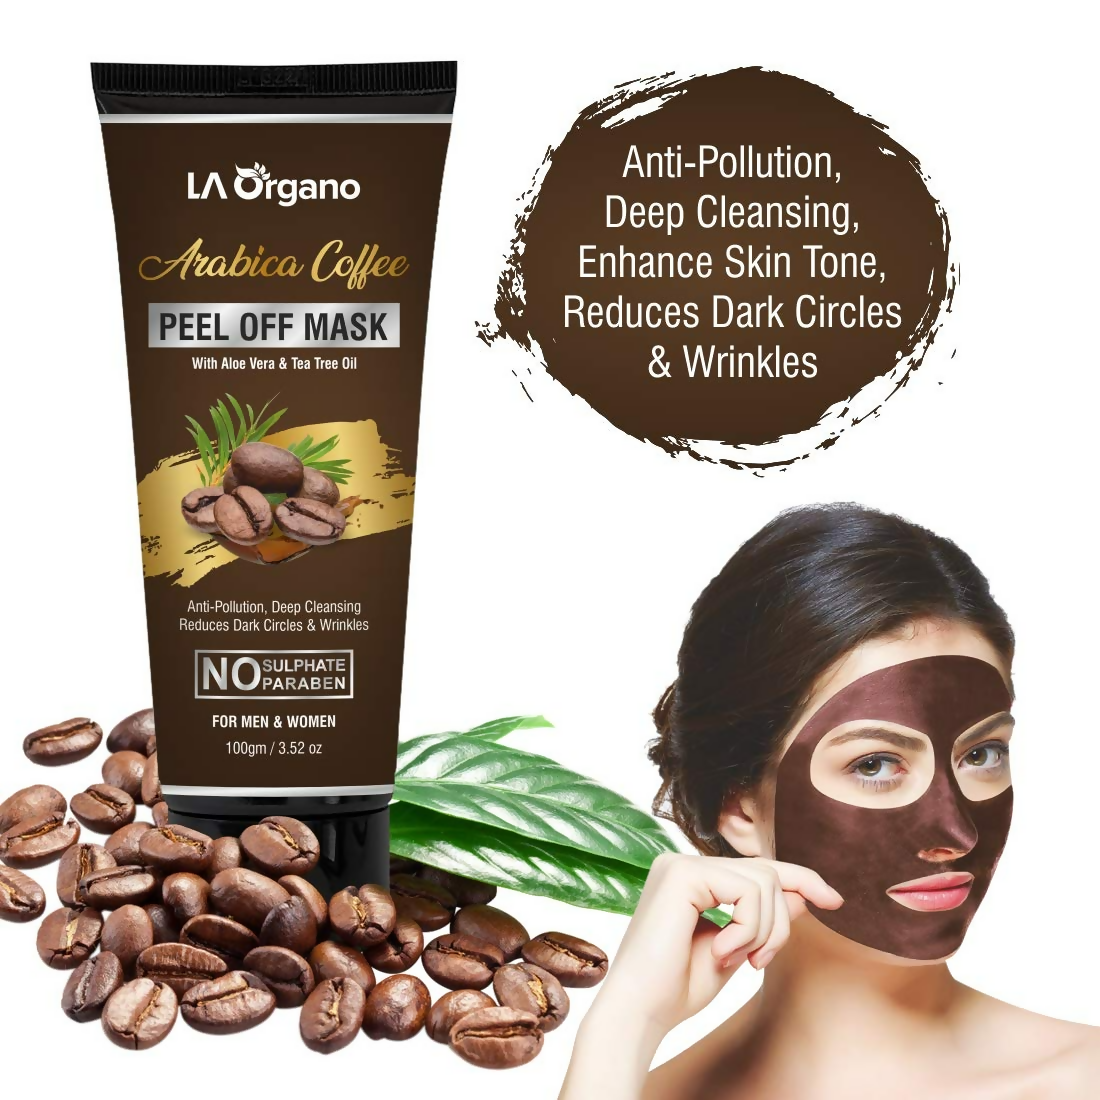 LA Organo Arabica Coffee Peel Off Mask